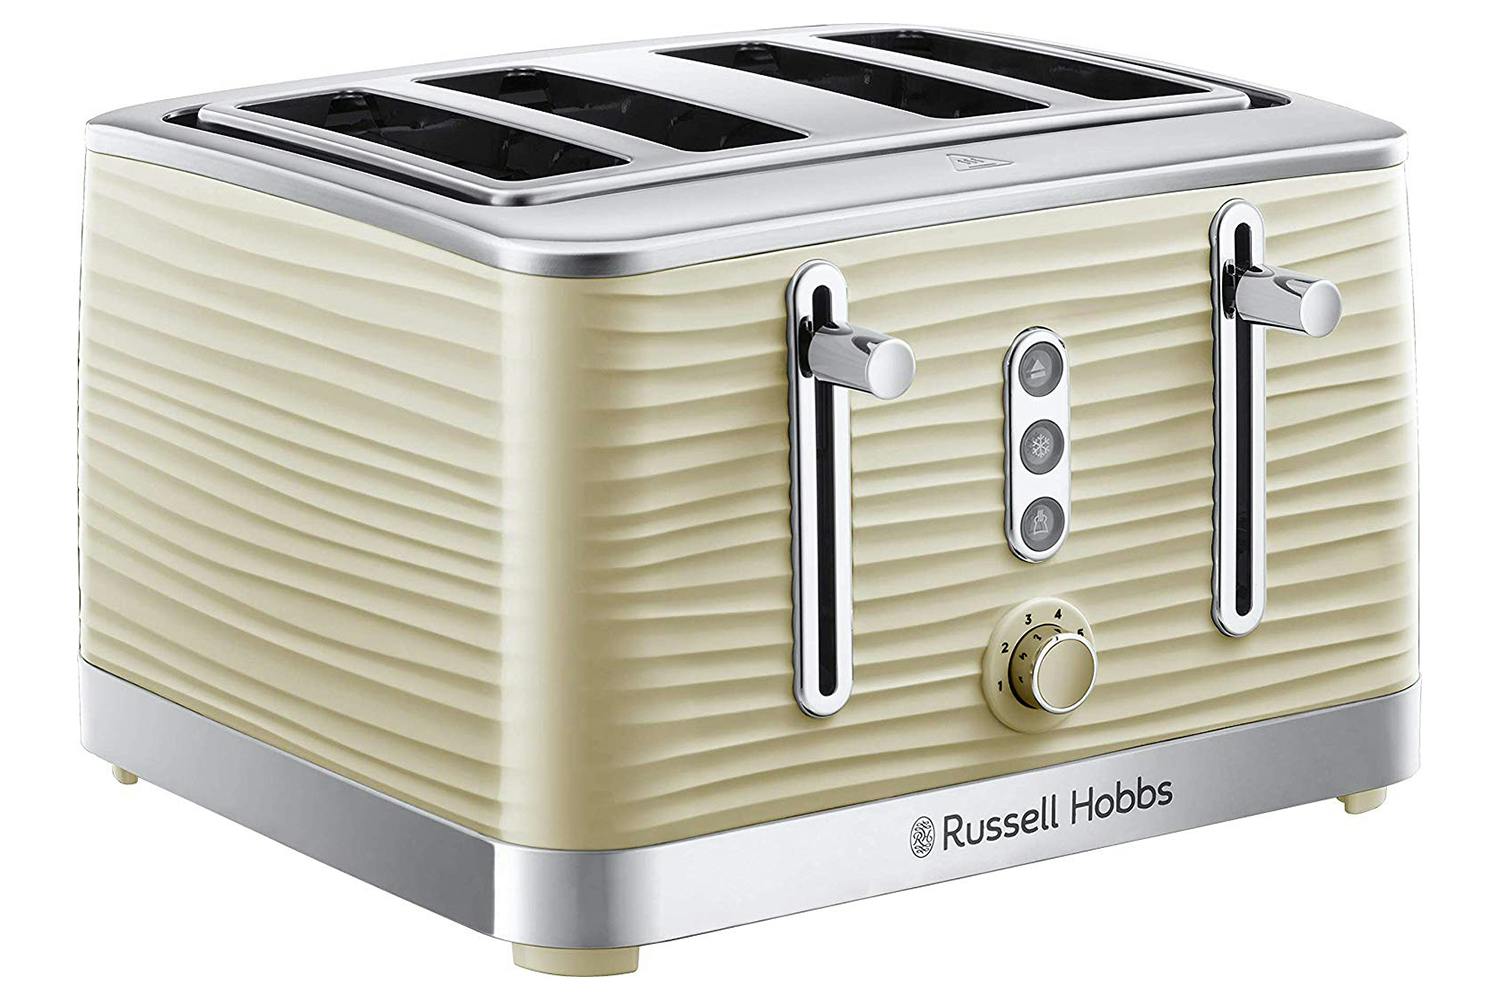 Russell Hobbs Inspire 4 Slice Toaster | 24384 | Cream